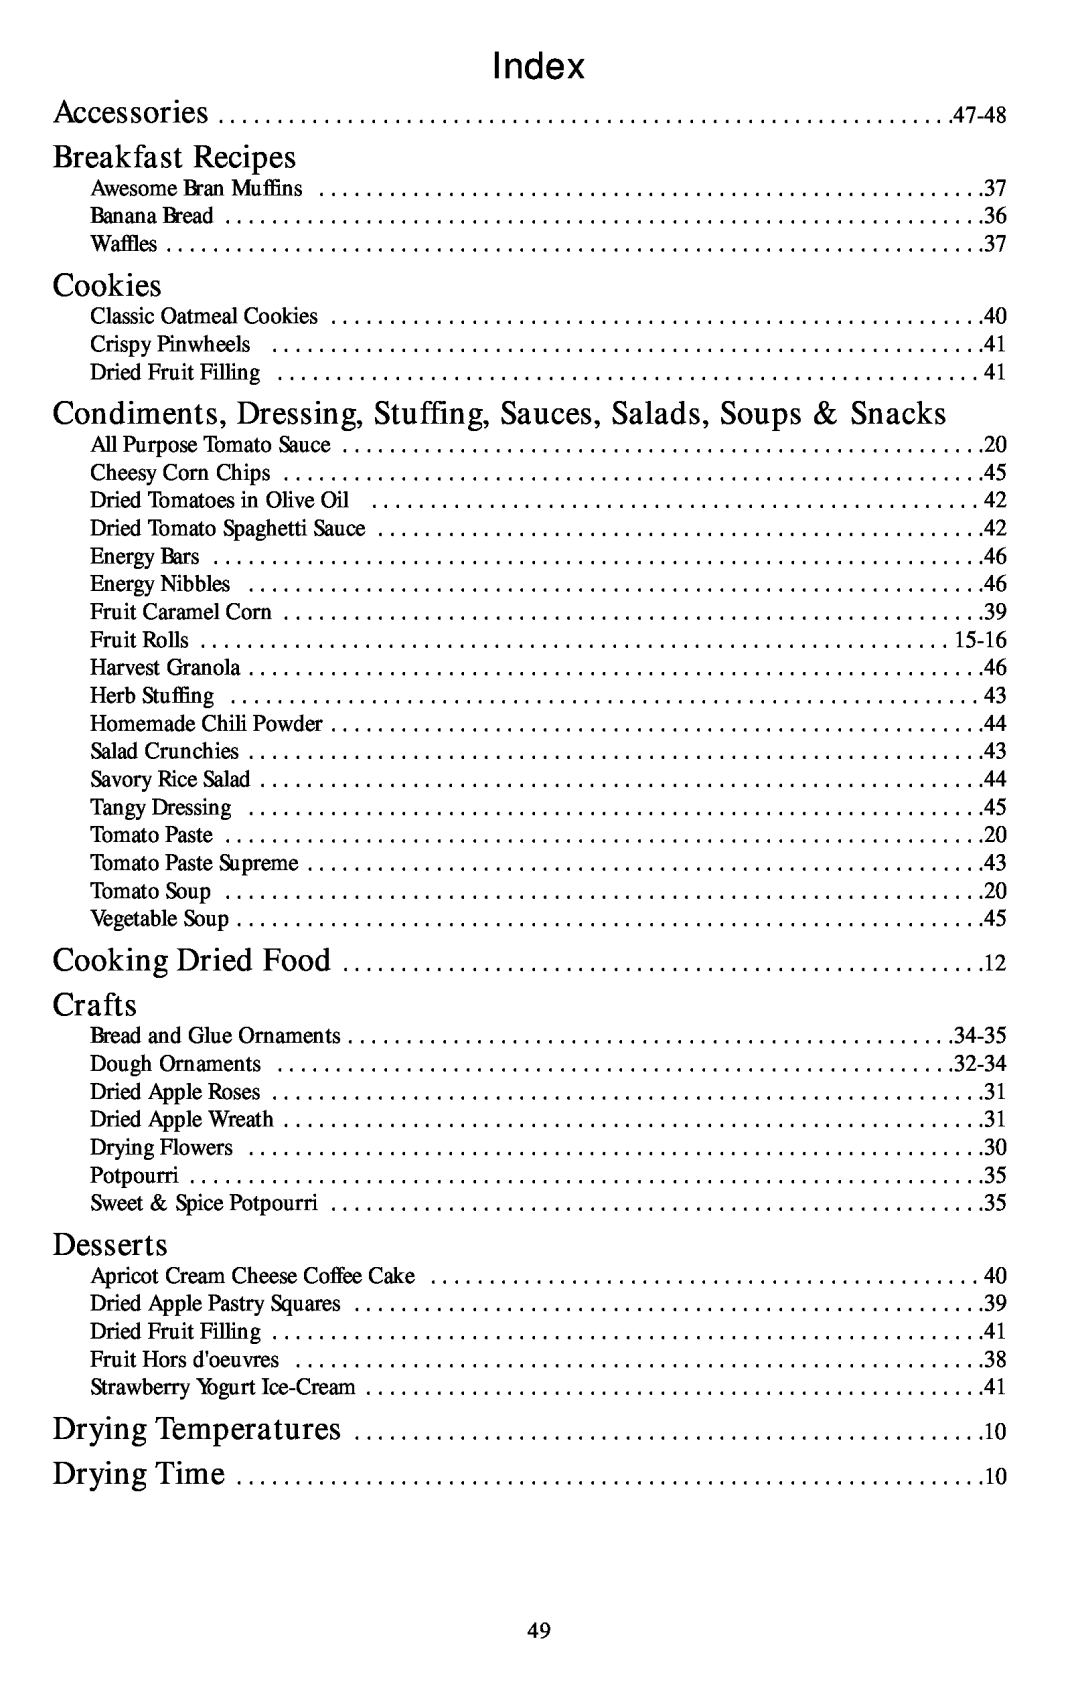 Nesco Food Dehydrator Index, Breakfast Recipes, Cookies, Condiments, Dressing, Stuffing, Sauces, Salads, Soups & Snacks 